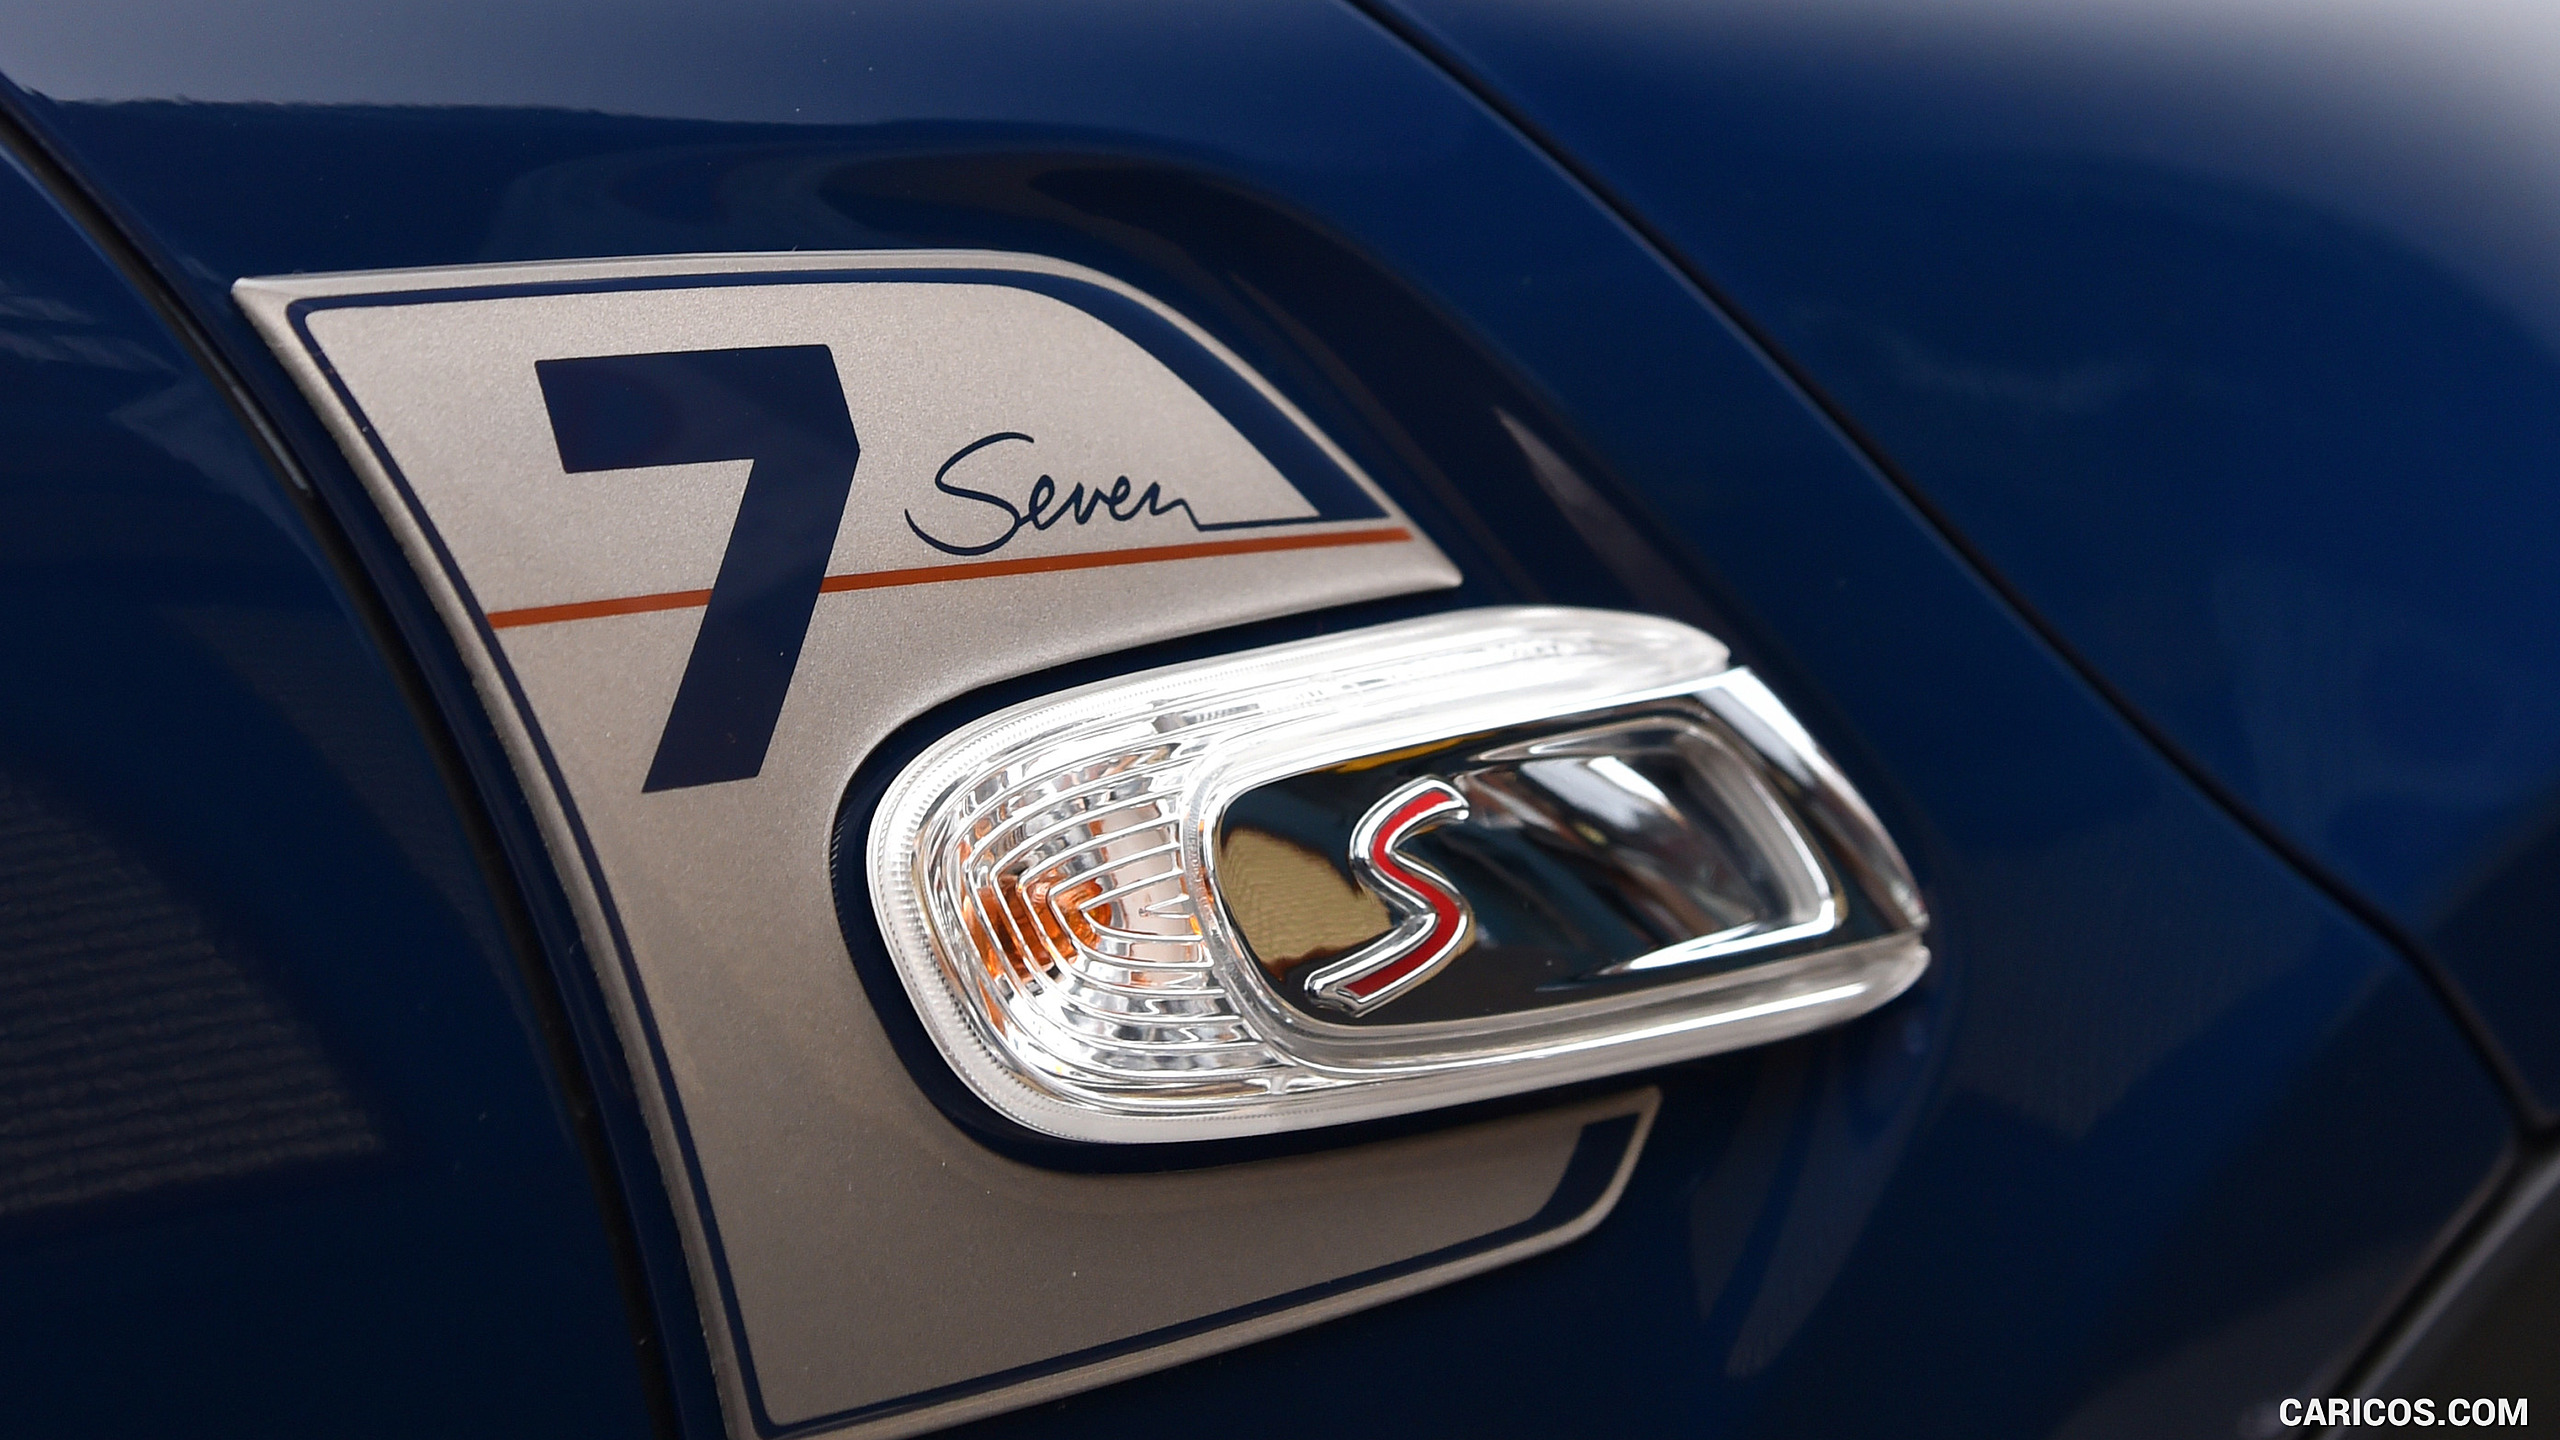 2016 MINI Cooper Seven - Badge, #76 of 92